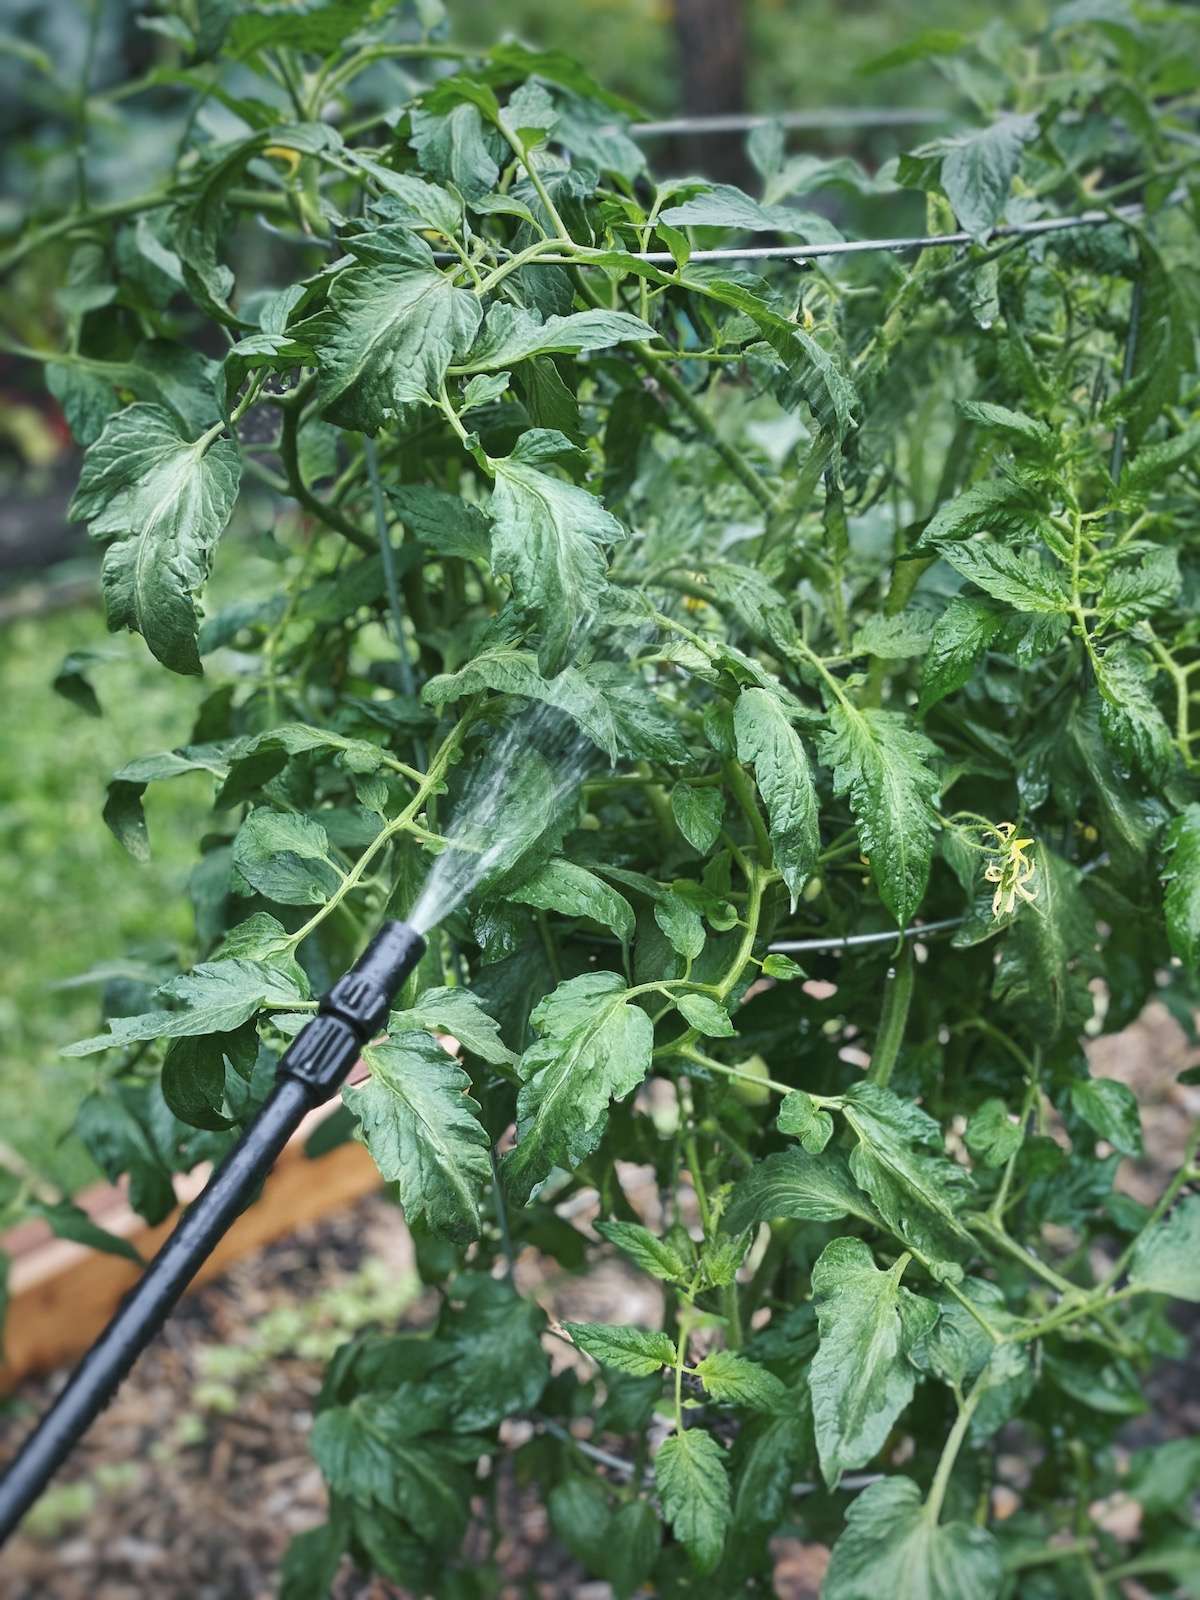 Spraying neem oil onto a tomato plant using a spraying wand